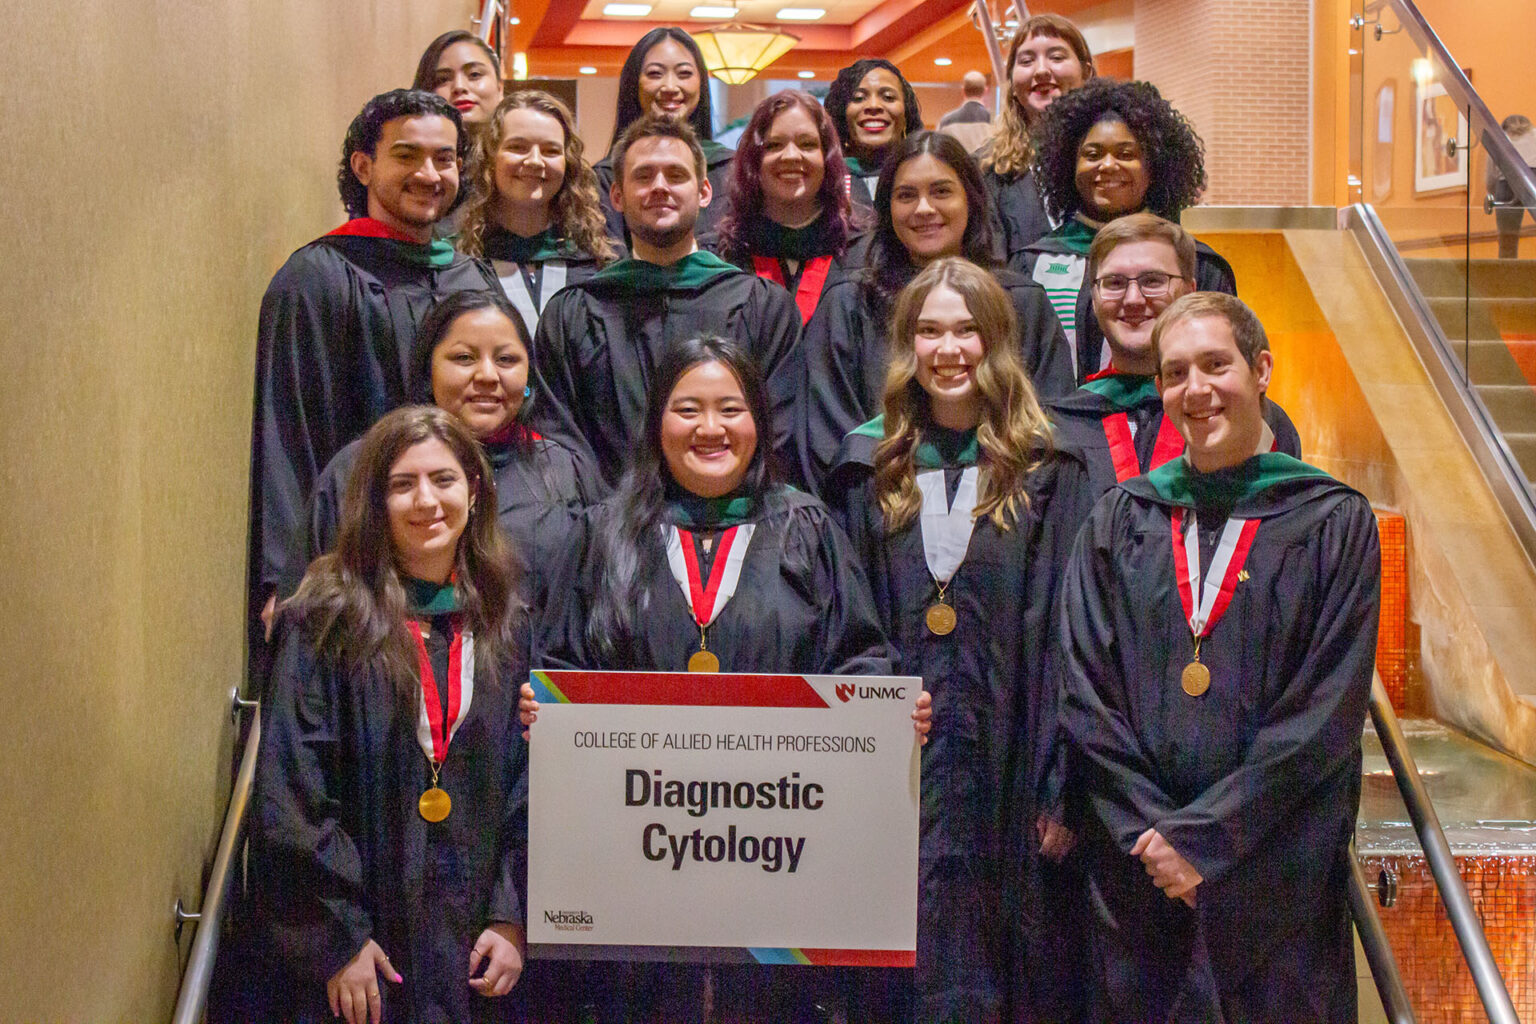 Distance diagnostic cytology grads gather to mark commencement